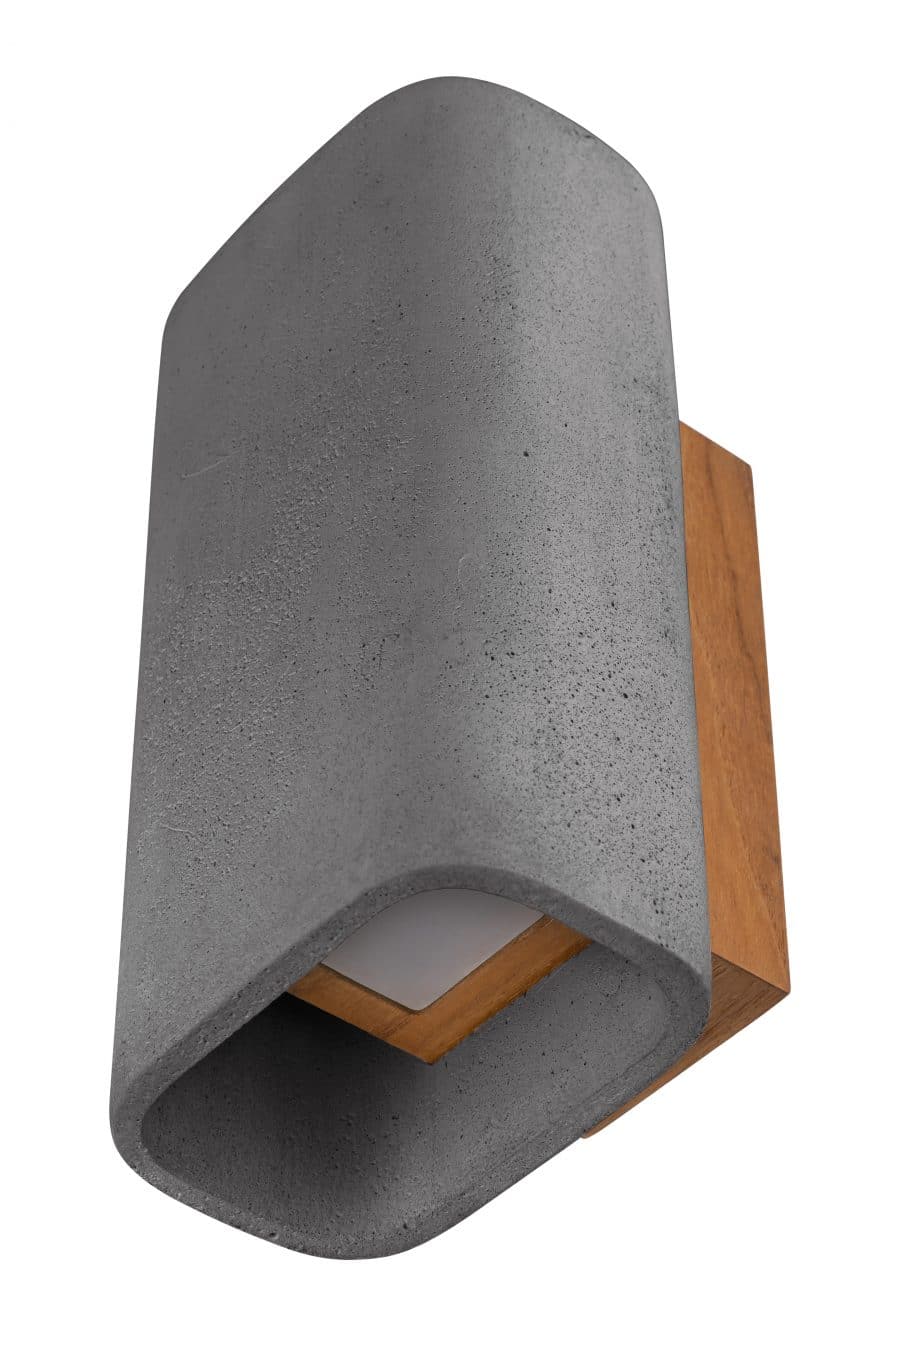 Con Teak loftlight antraciet grijs buitenlamp beton concrete teak tuinextra kaatsheuvel